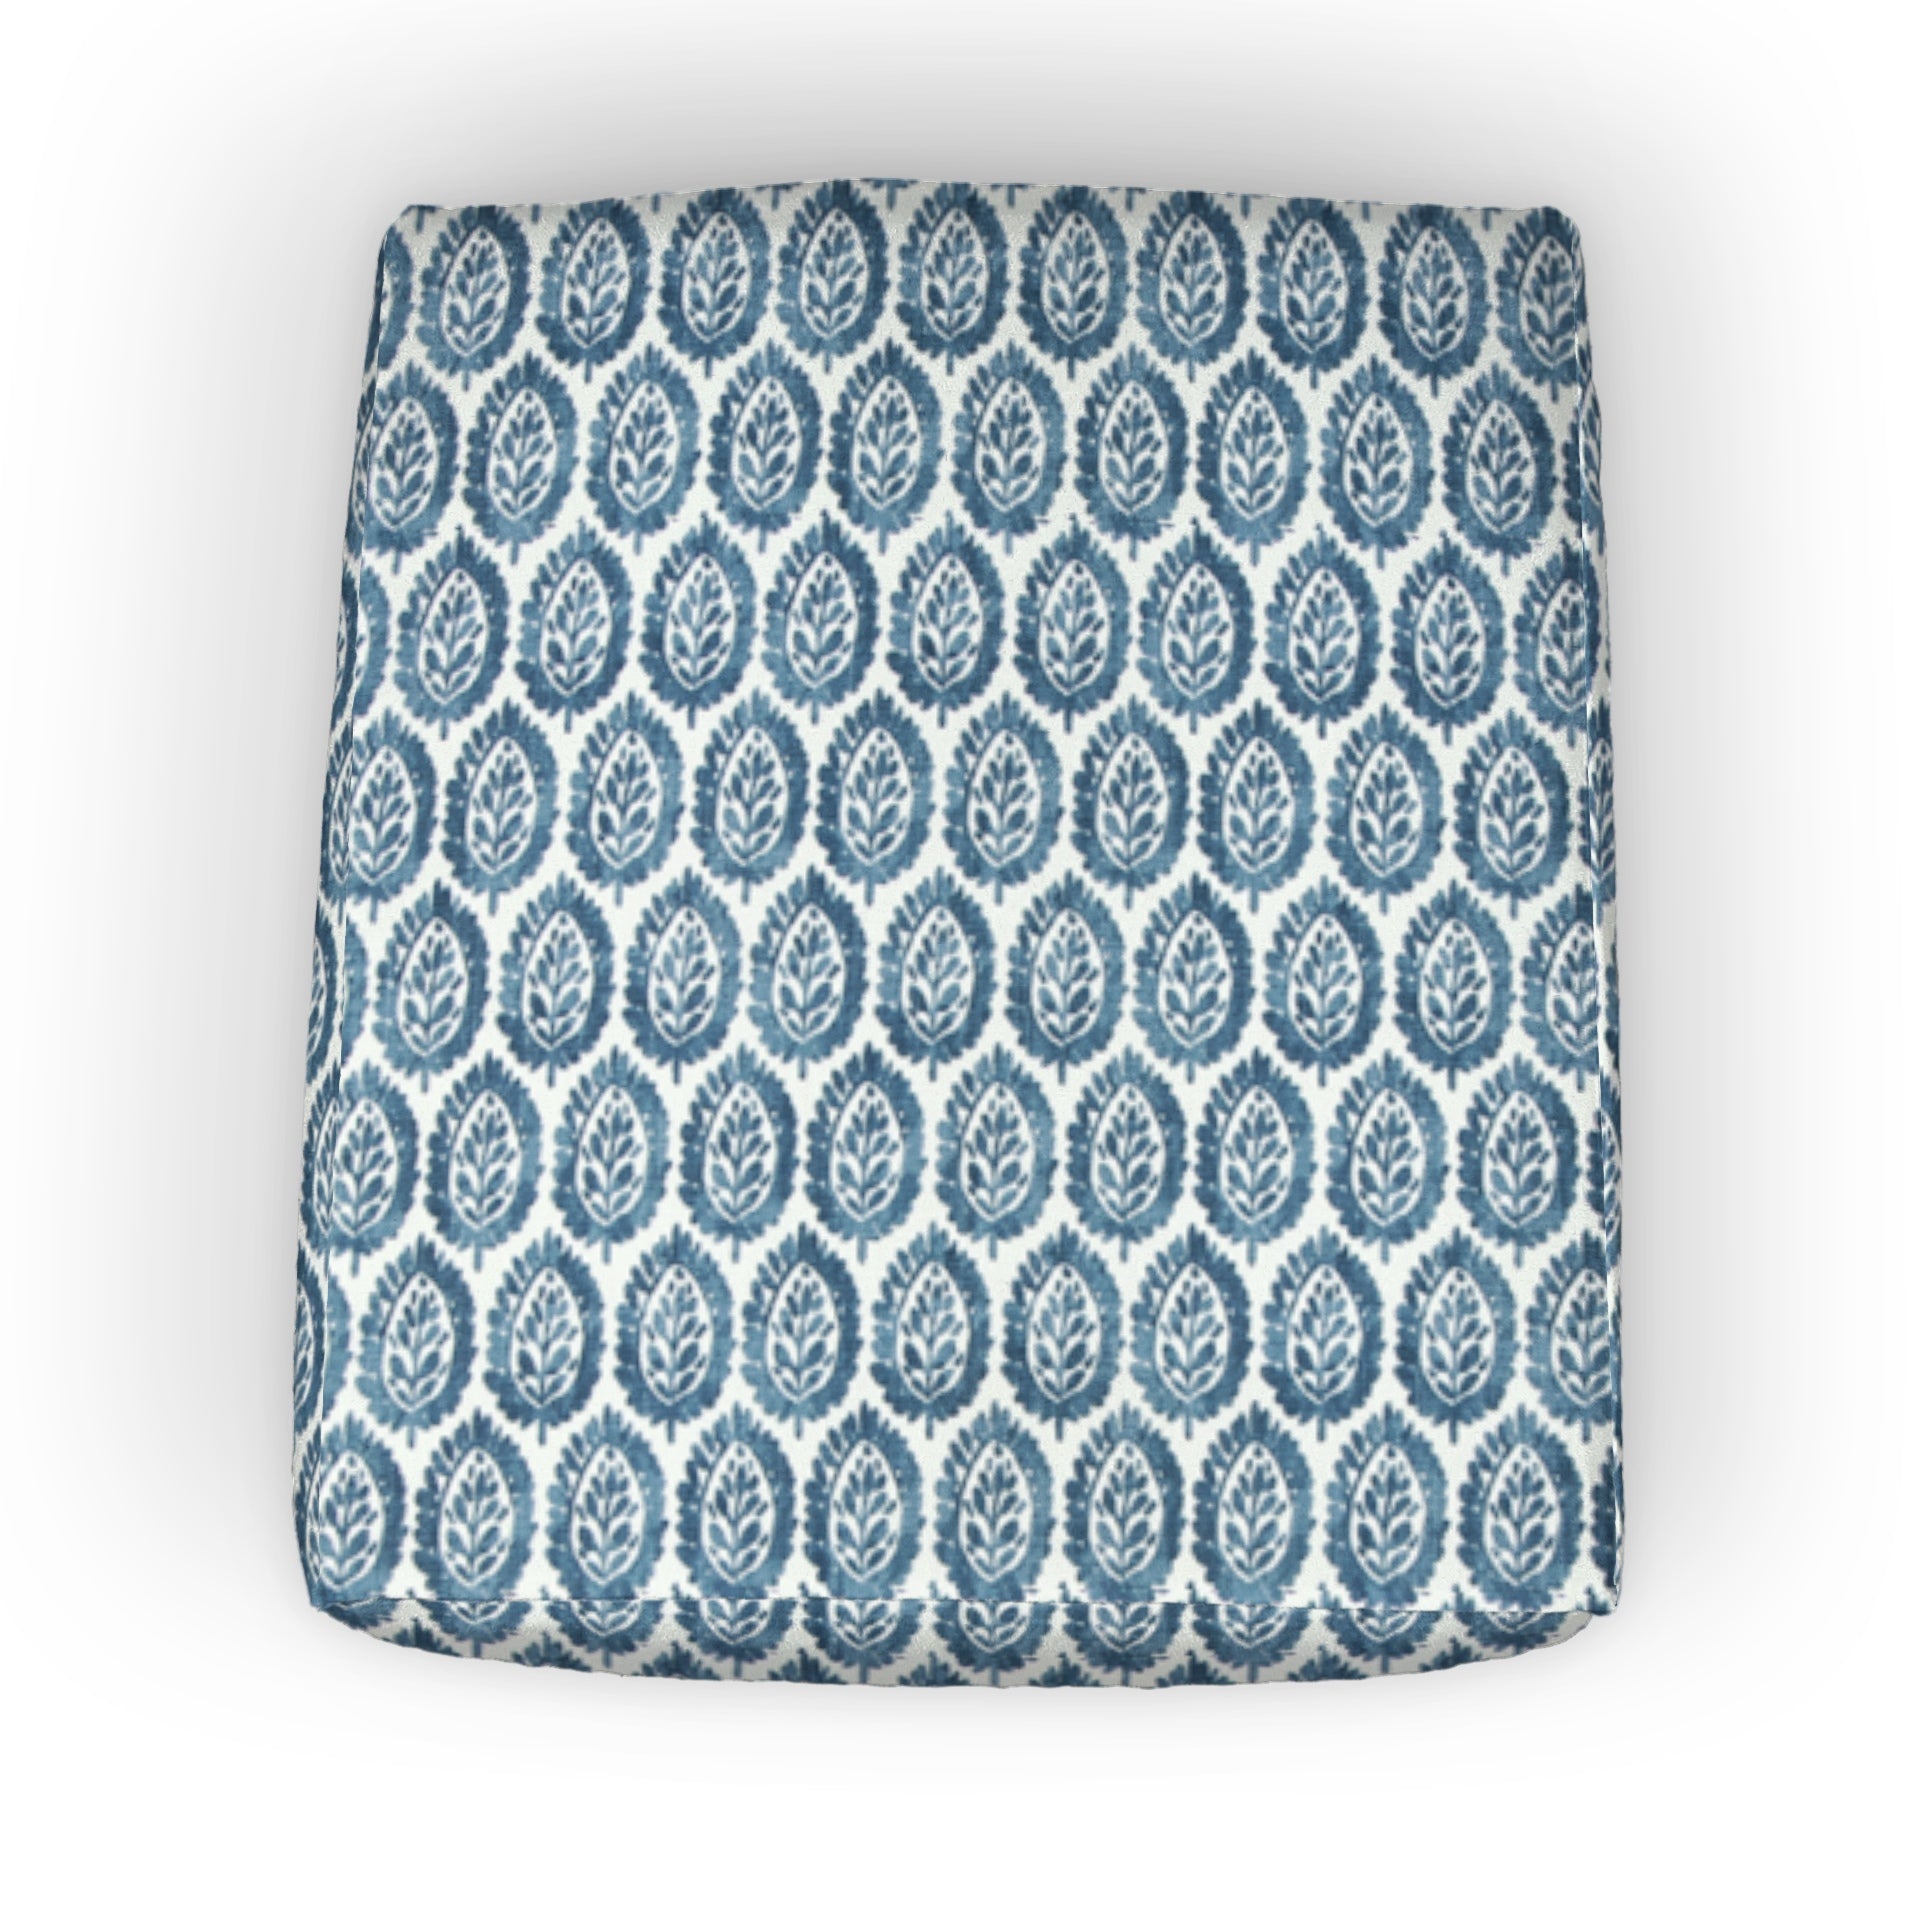 Fabric Sample Only 3x5 Inch - Lynn Cotton Slub - Choice of Color